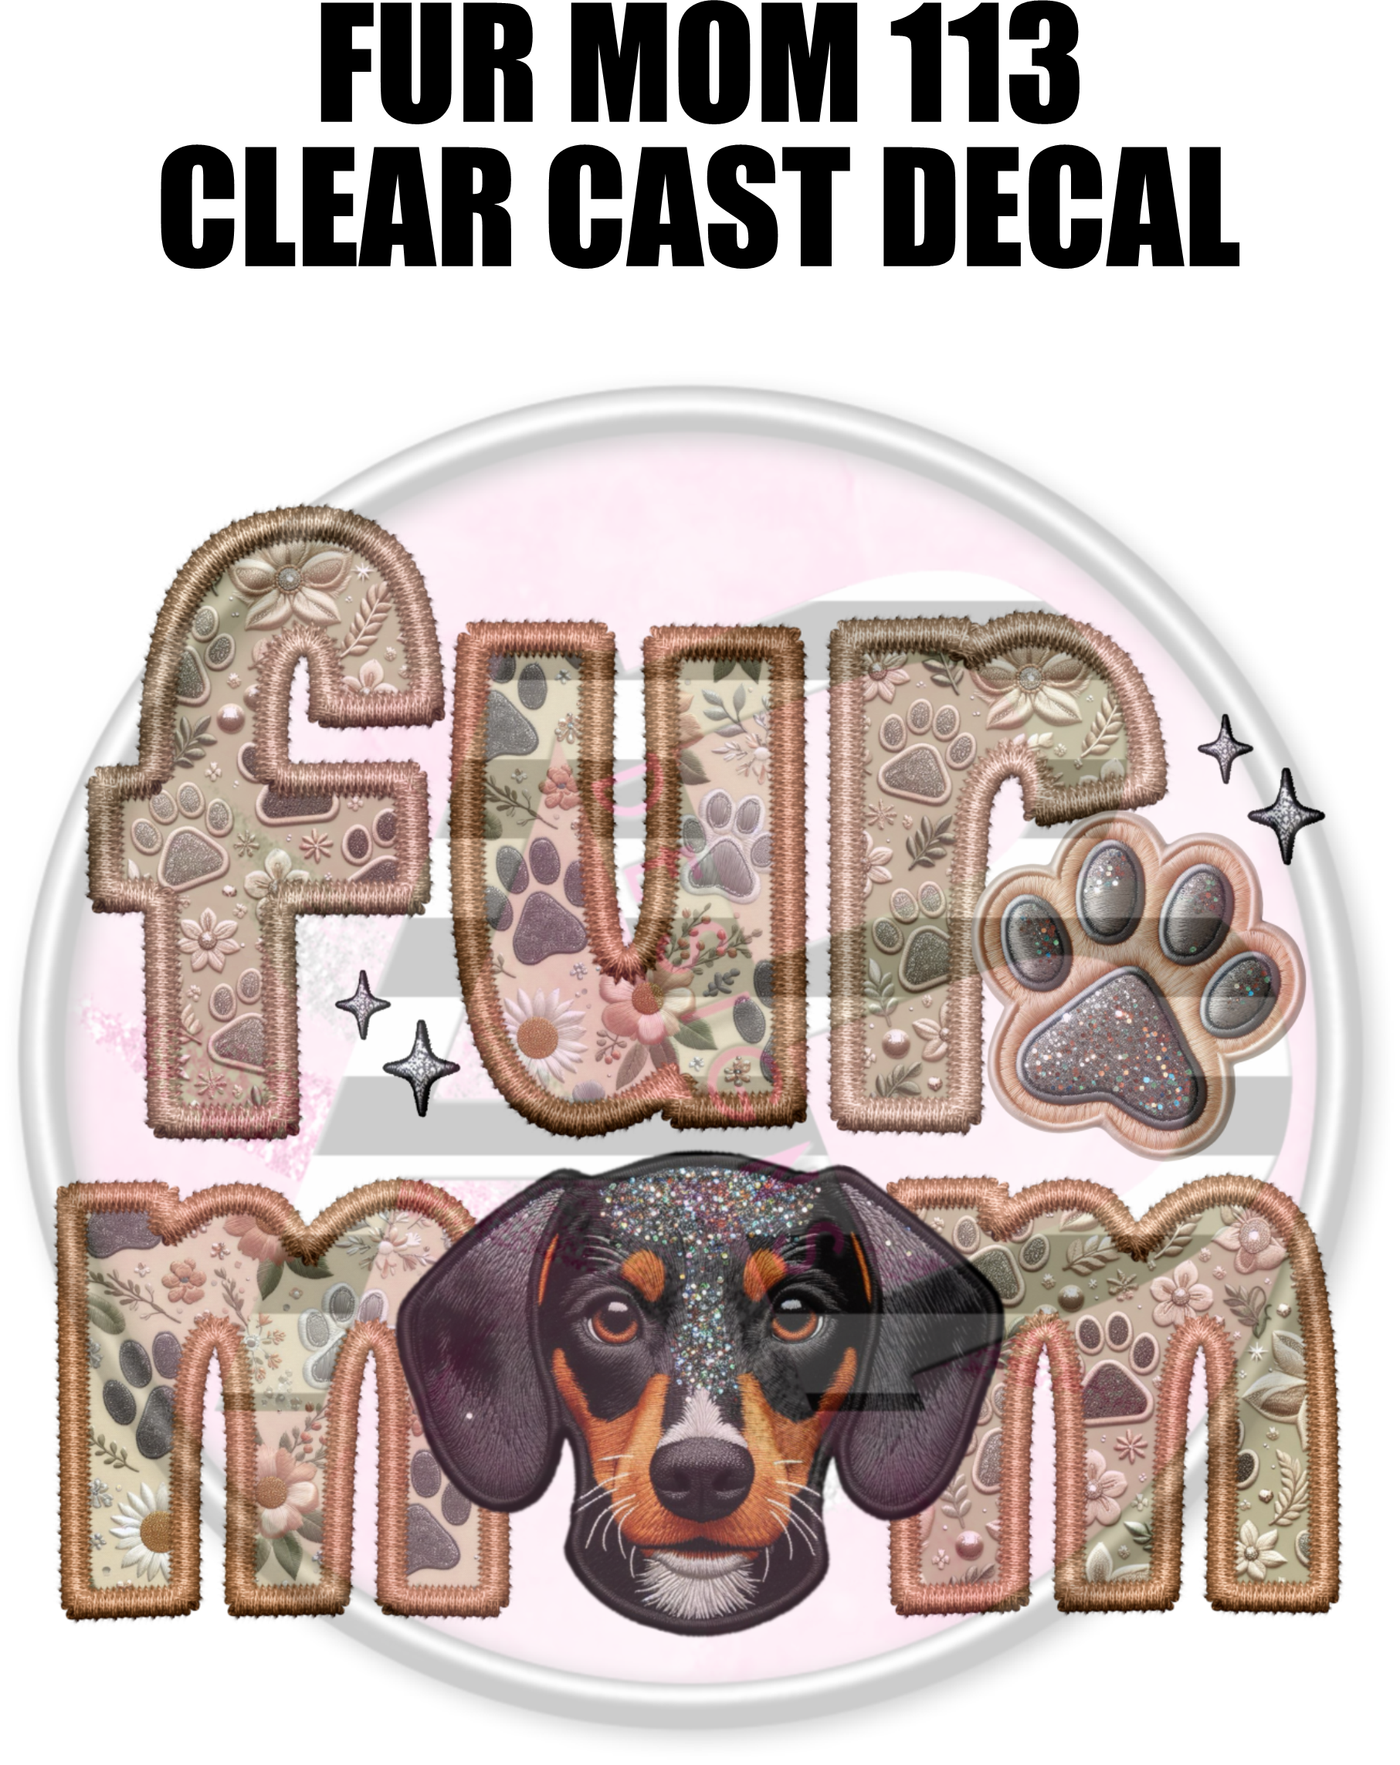 Fur Mom 113 - Clear Cast Decal